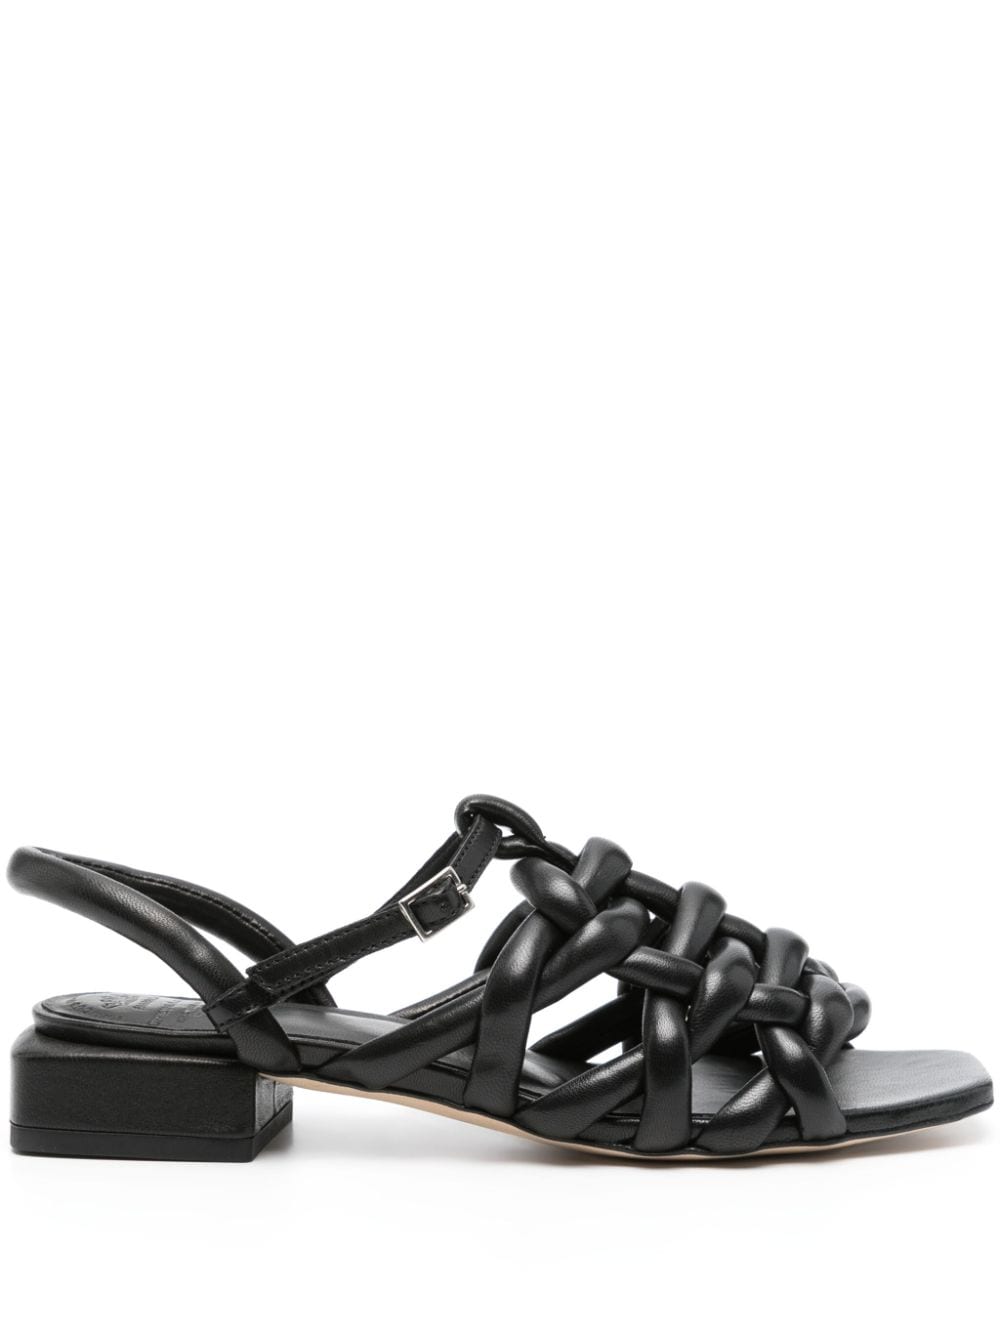 Officine Creative Gillian leather sandals Black